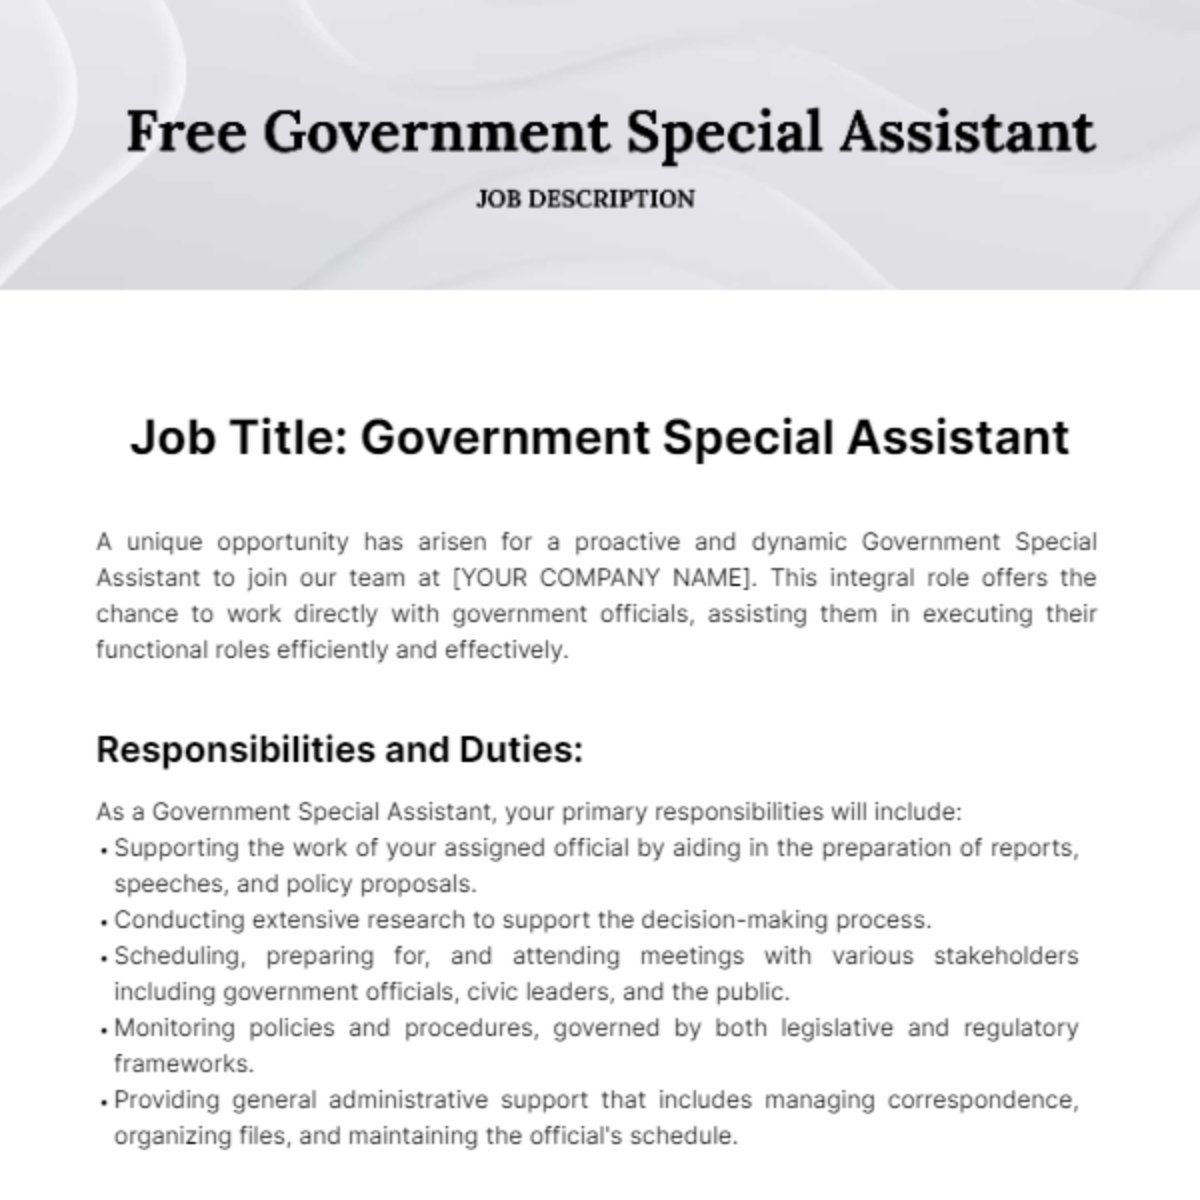 Free Government Special Assistant Job Description Template